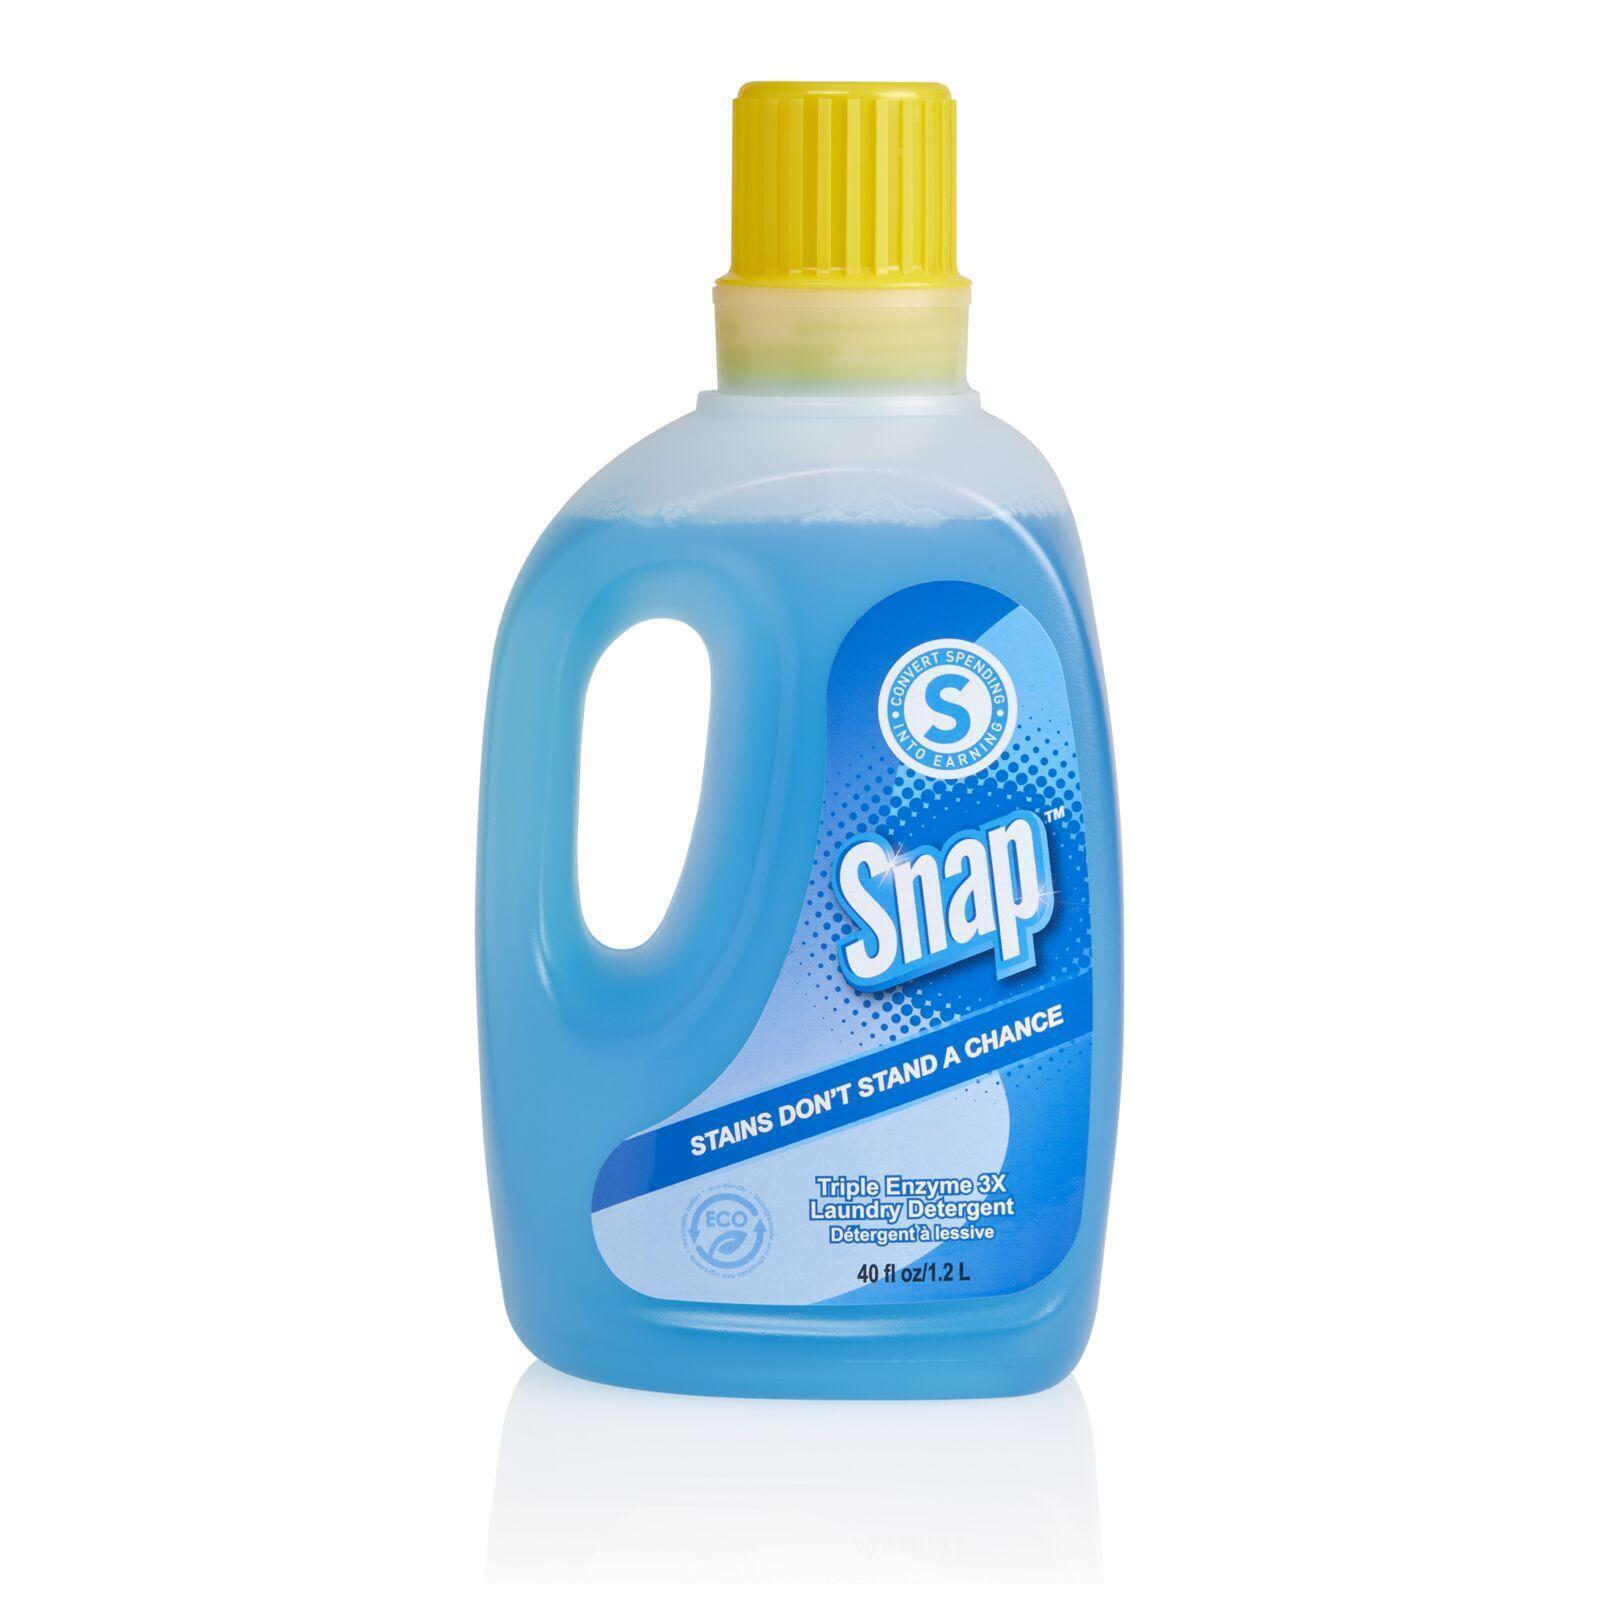 Snap® Triple Enzyme 3X Laundry Detergent